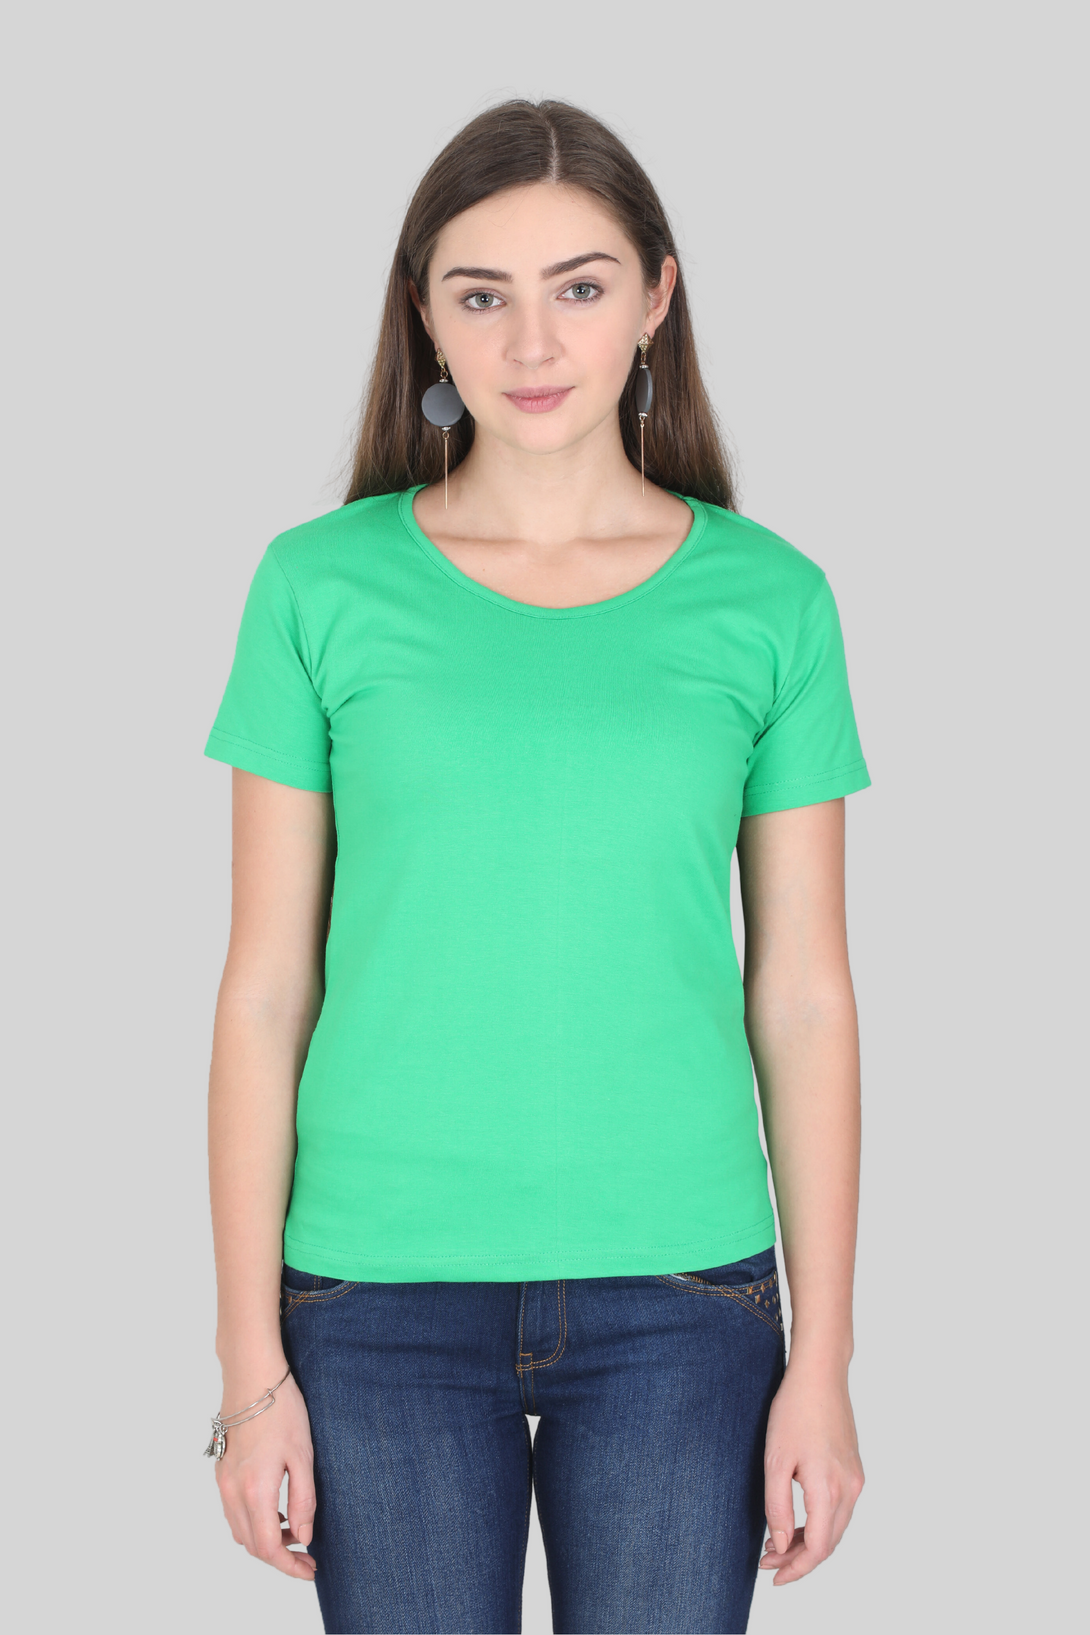 Flag Green Scoop Neck T-Shirt For Women - WowWaves - 3